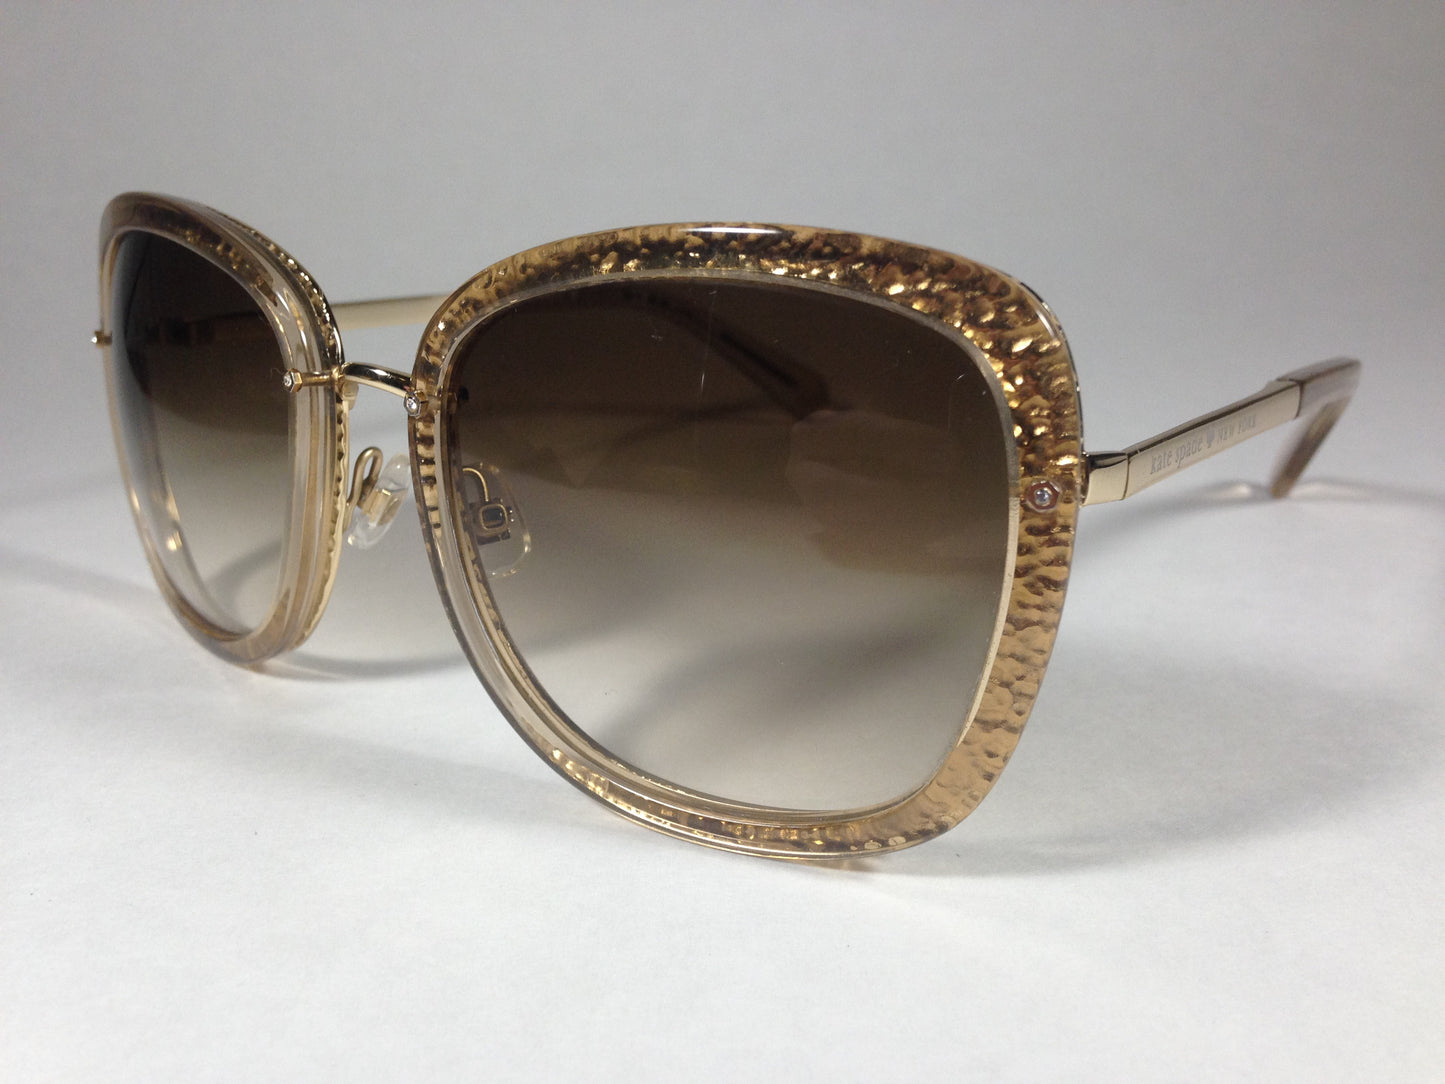 Kate Spade Womens Scottie 0Cw2 Cc Butterfly Sunglasses Gold Glitter Brown Gradient New - Sunglasses